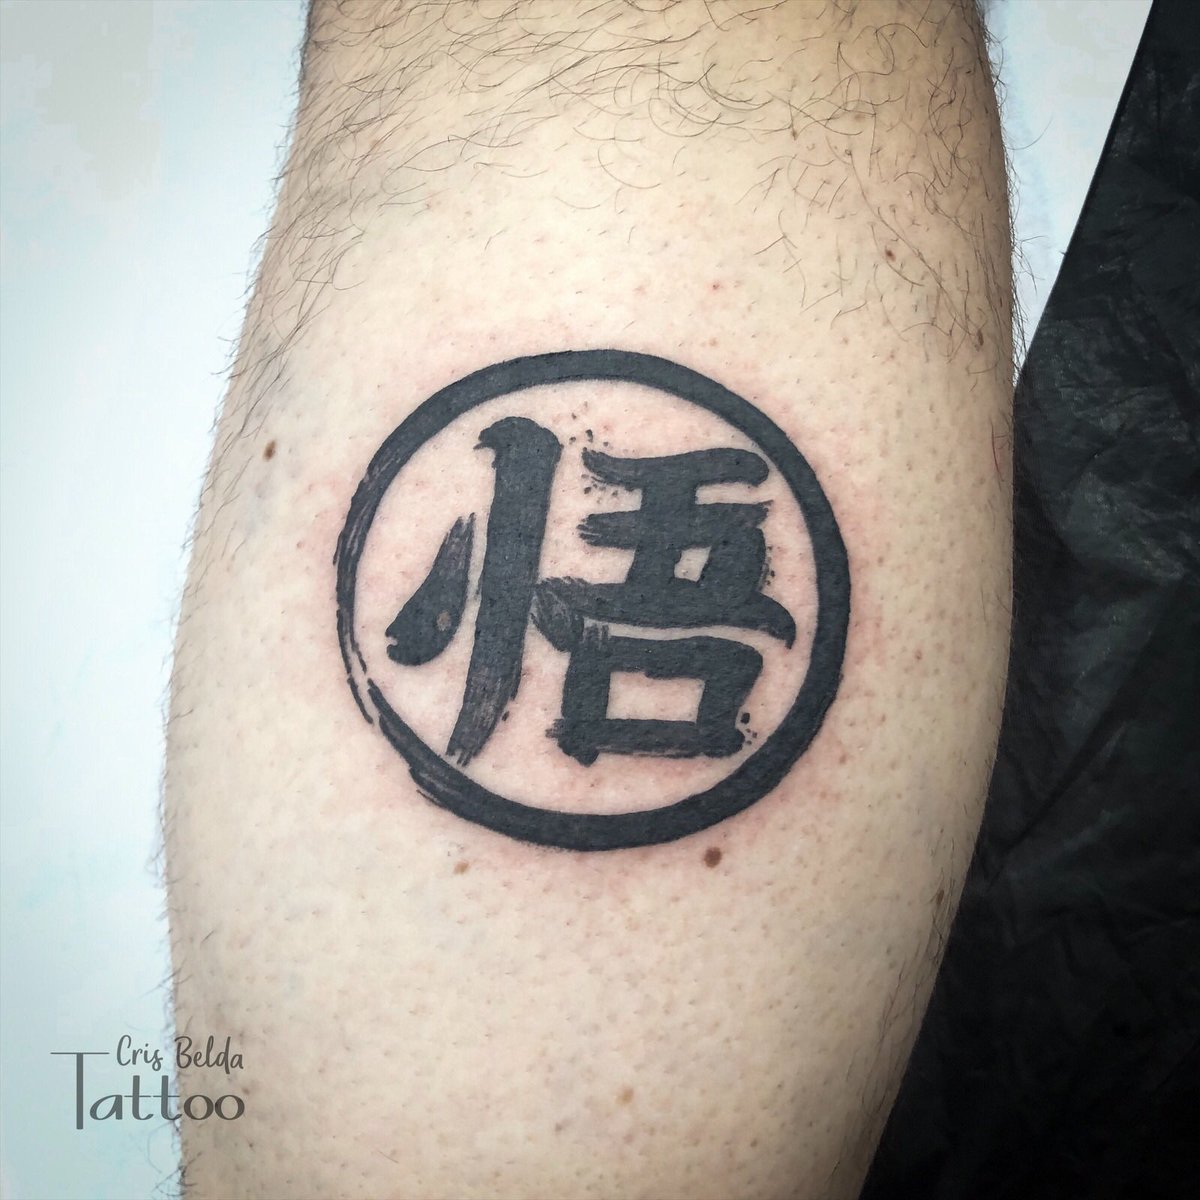 X \ Cris Belda على X: "Kanji de Goku para ir al planeta Namek . #tattoo #dragonball #blackwork #kanjigoku #brushtattoo #spaintattoo https://t.co/SFr5LbZBW9"